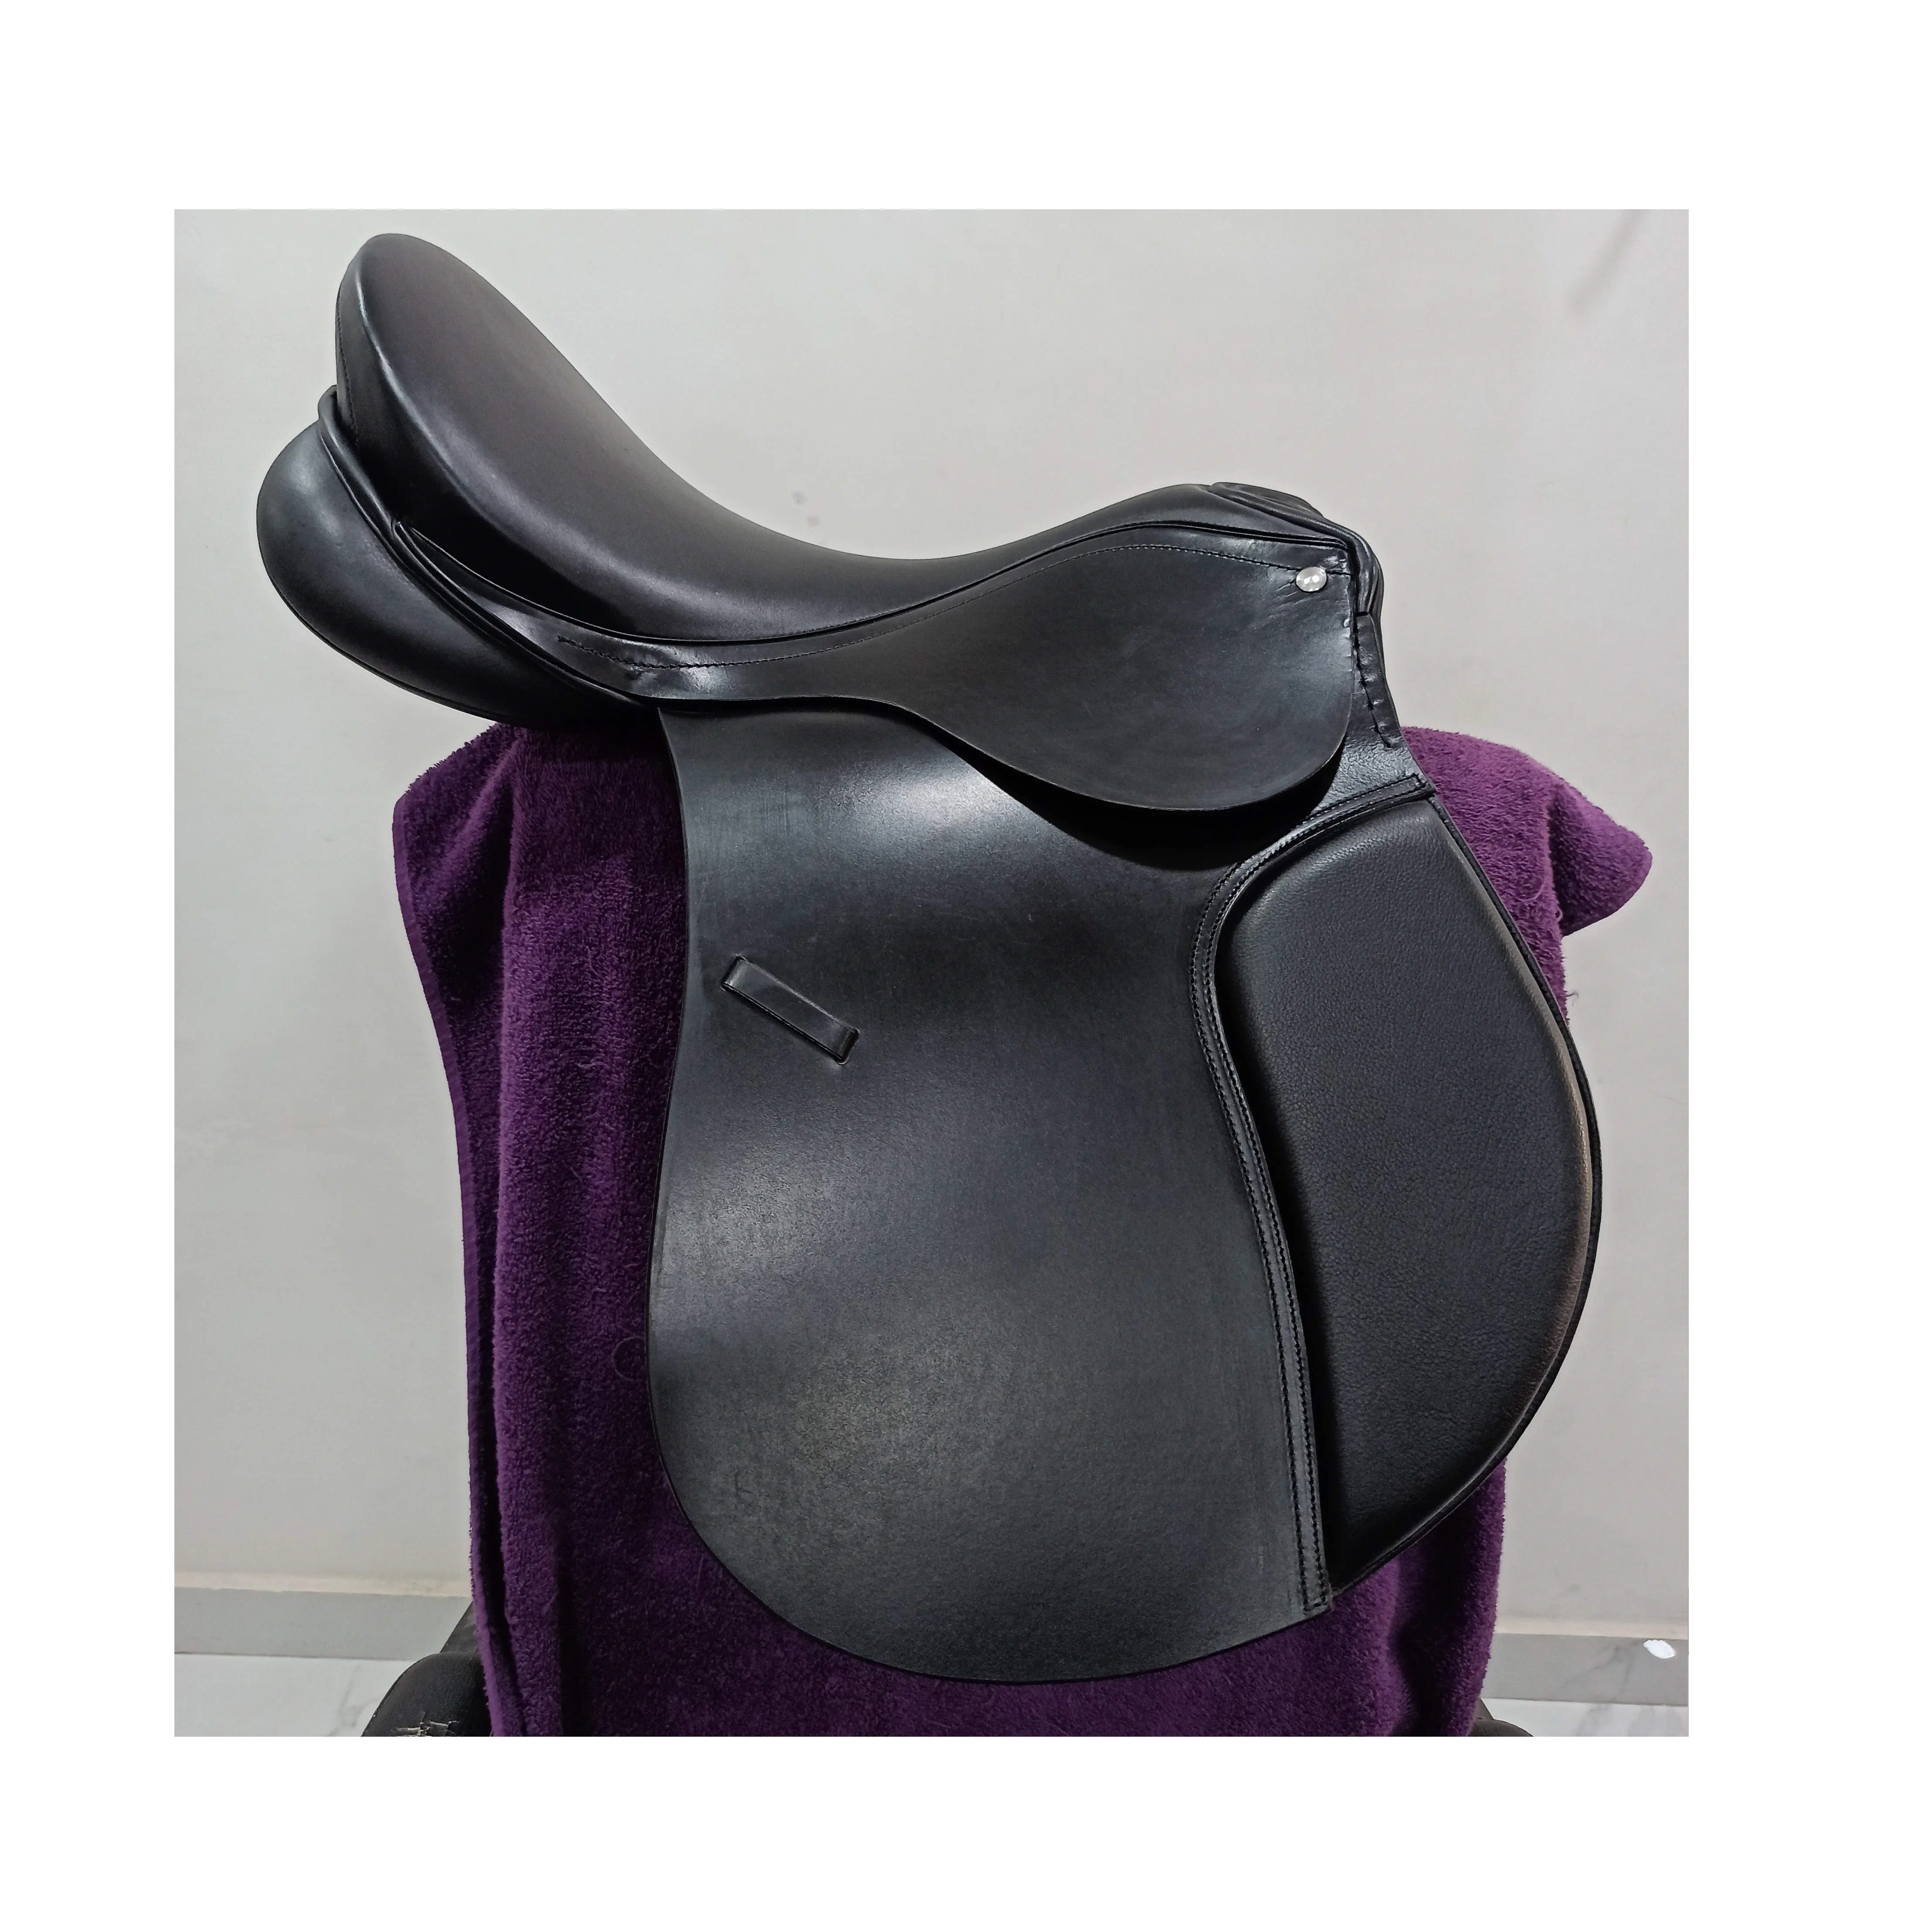 Desain pintar kualitas tinggi DD sadel kuda lompat kulit dengan kursi kulit sapi empuk/sadel kuda